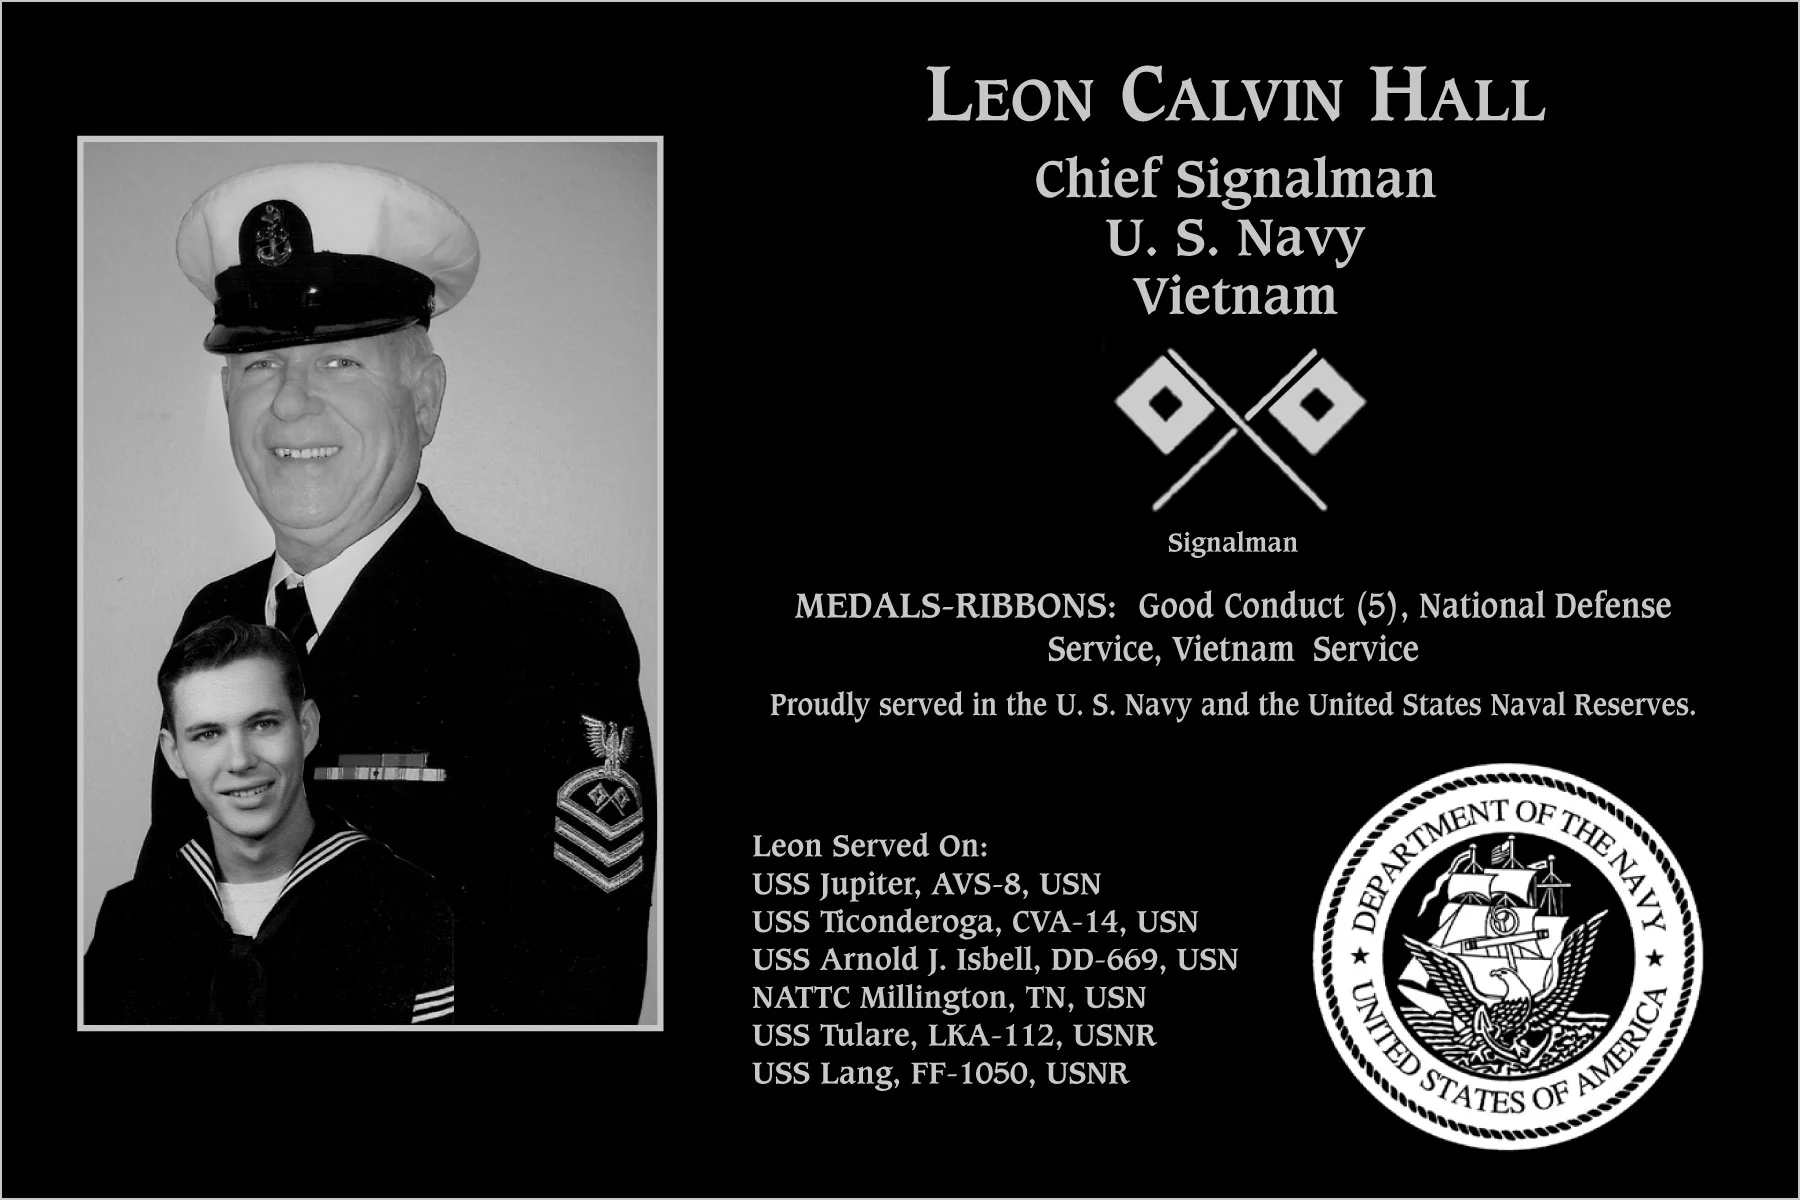 Leon Calvin Hall